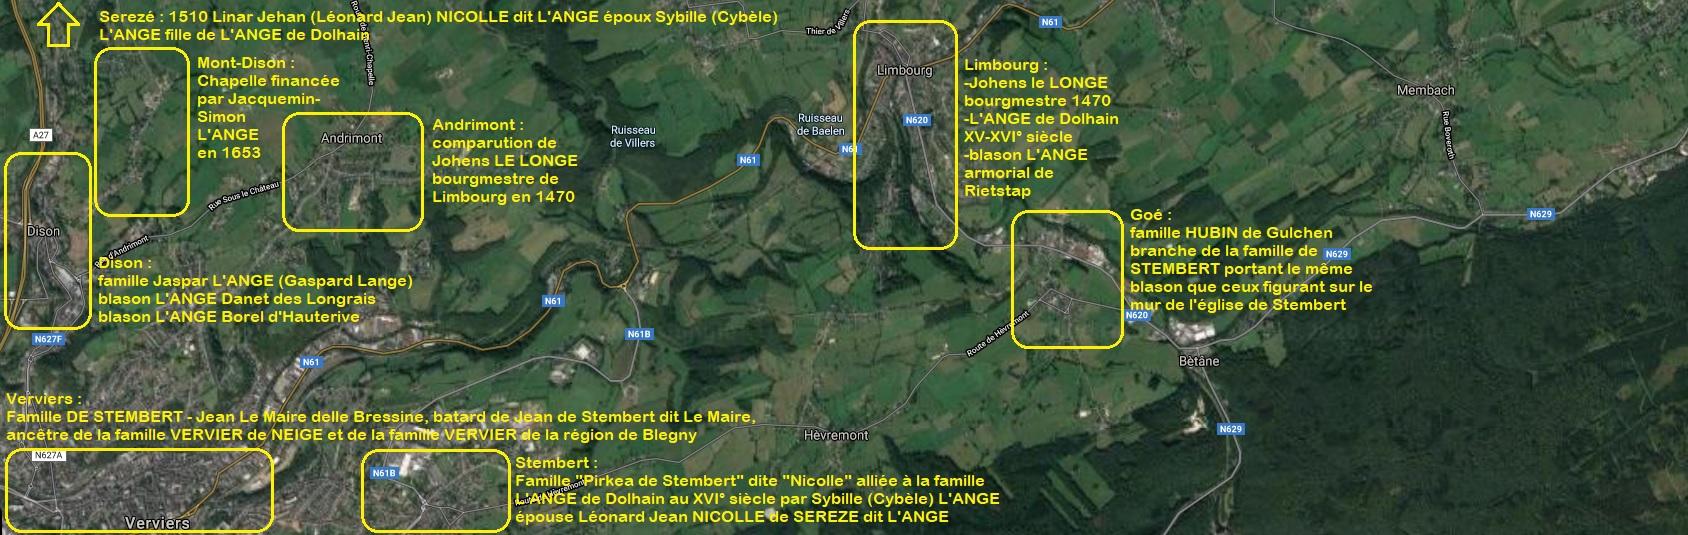 Limbourg carte satellite villages avoisinants